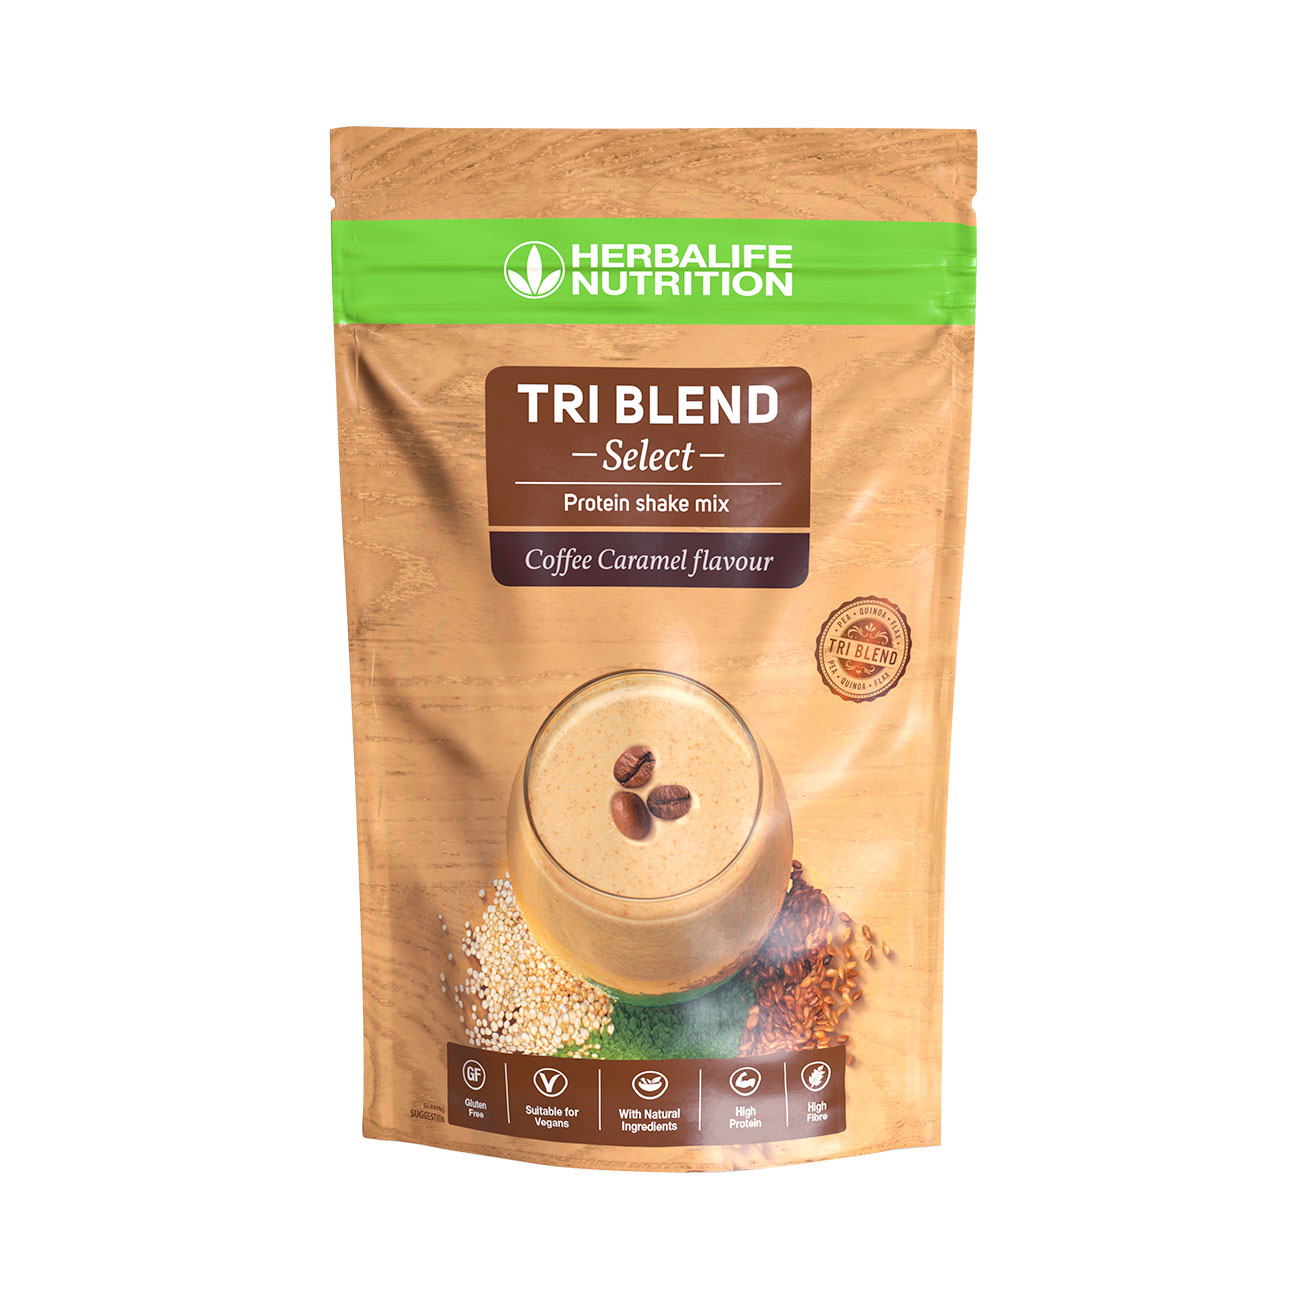 Tri Blend Select Shake protéiné végétal Café caramel product shot